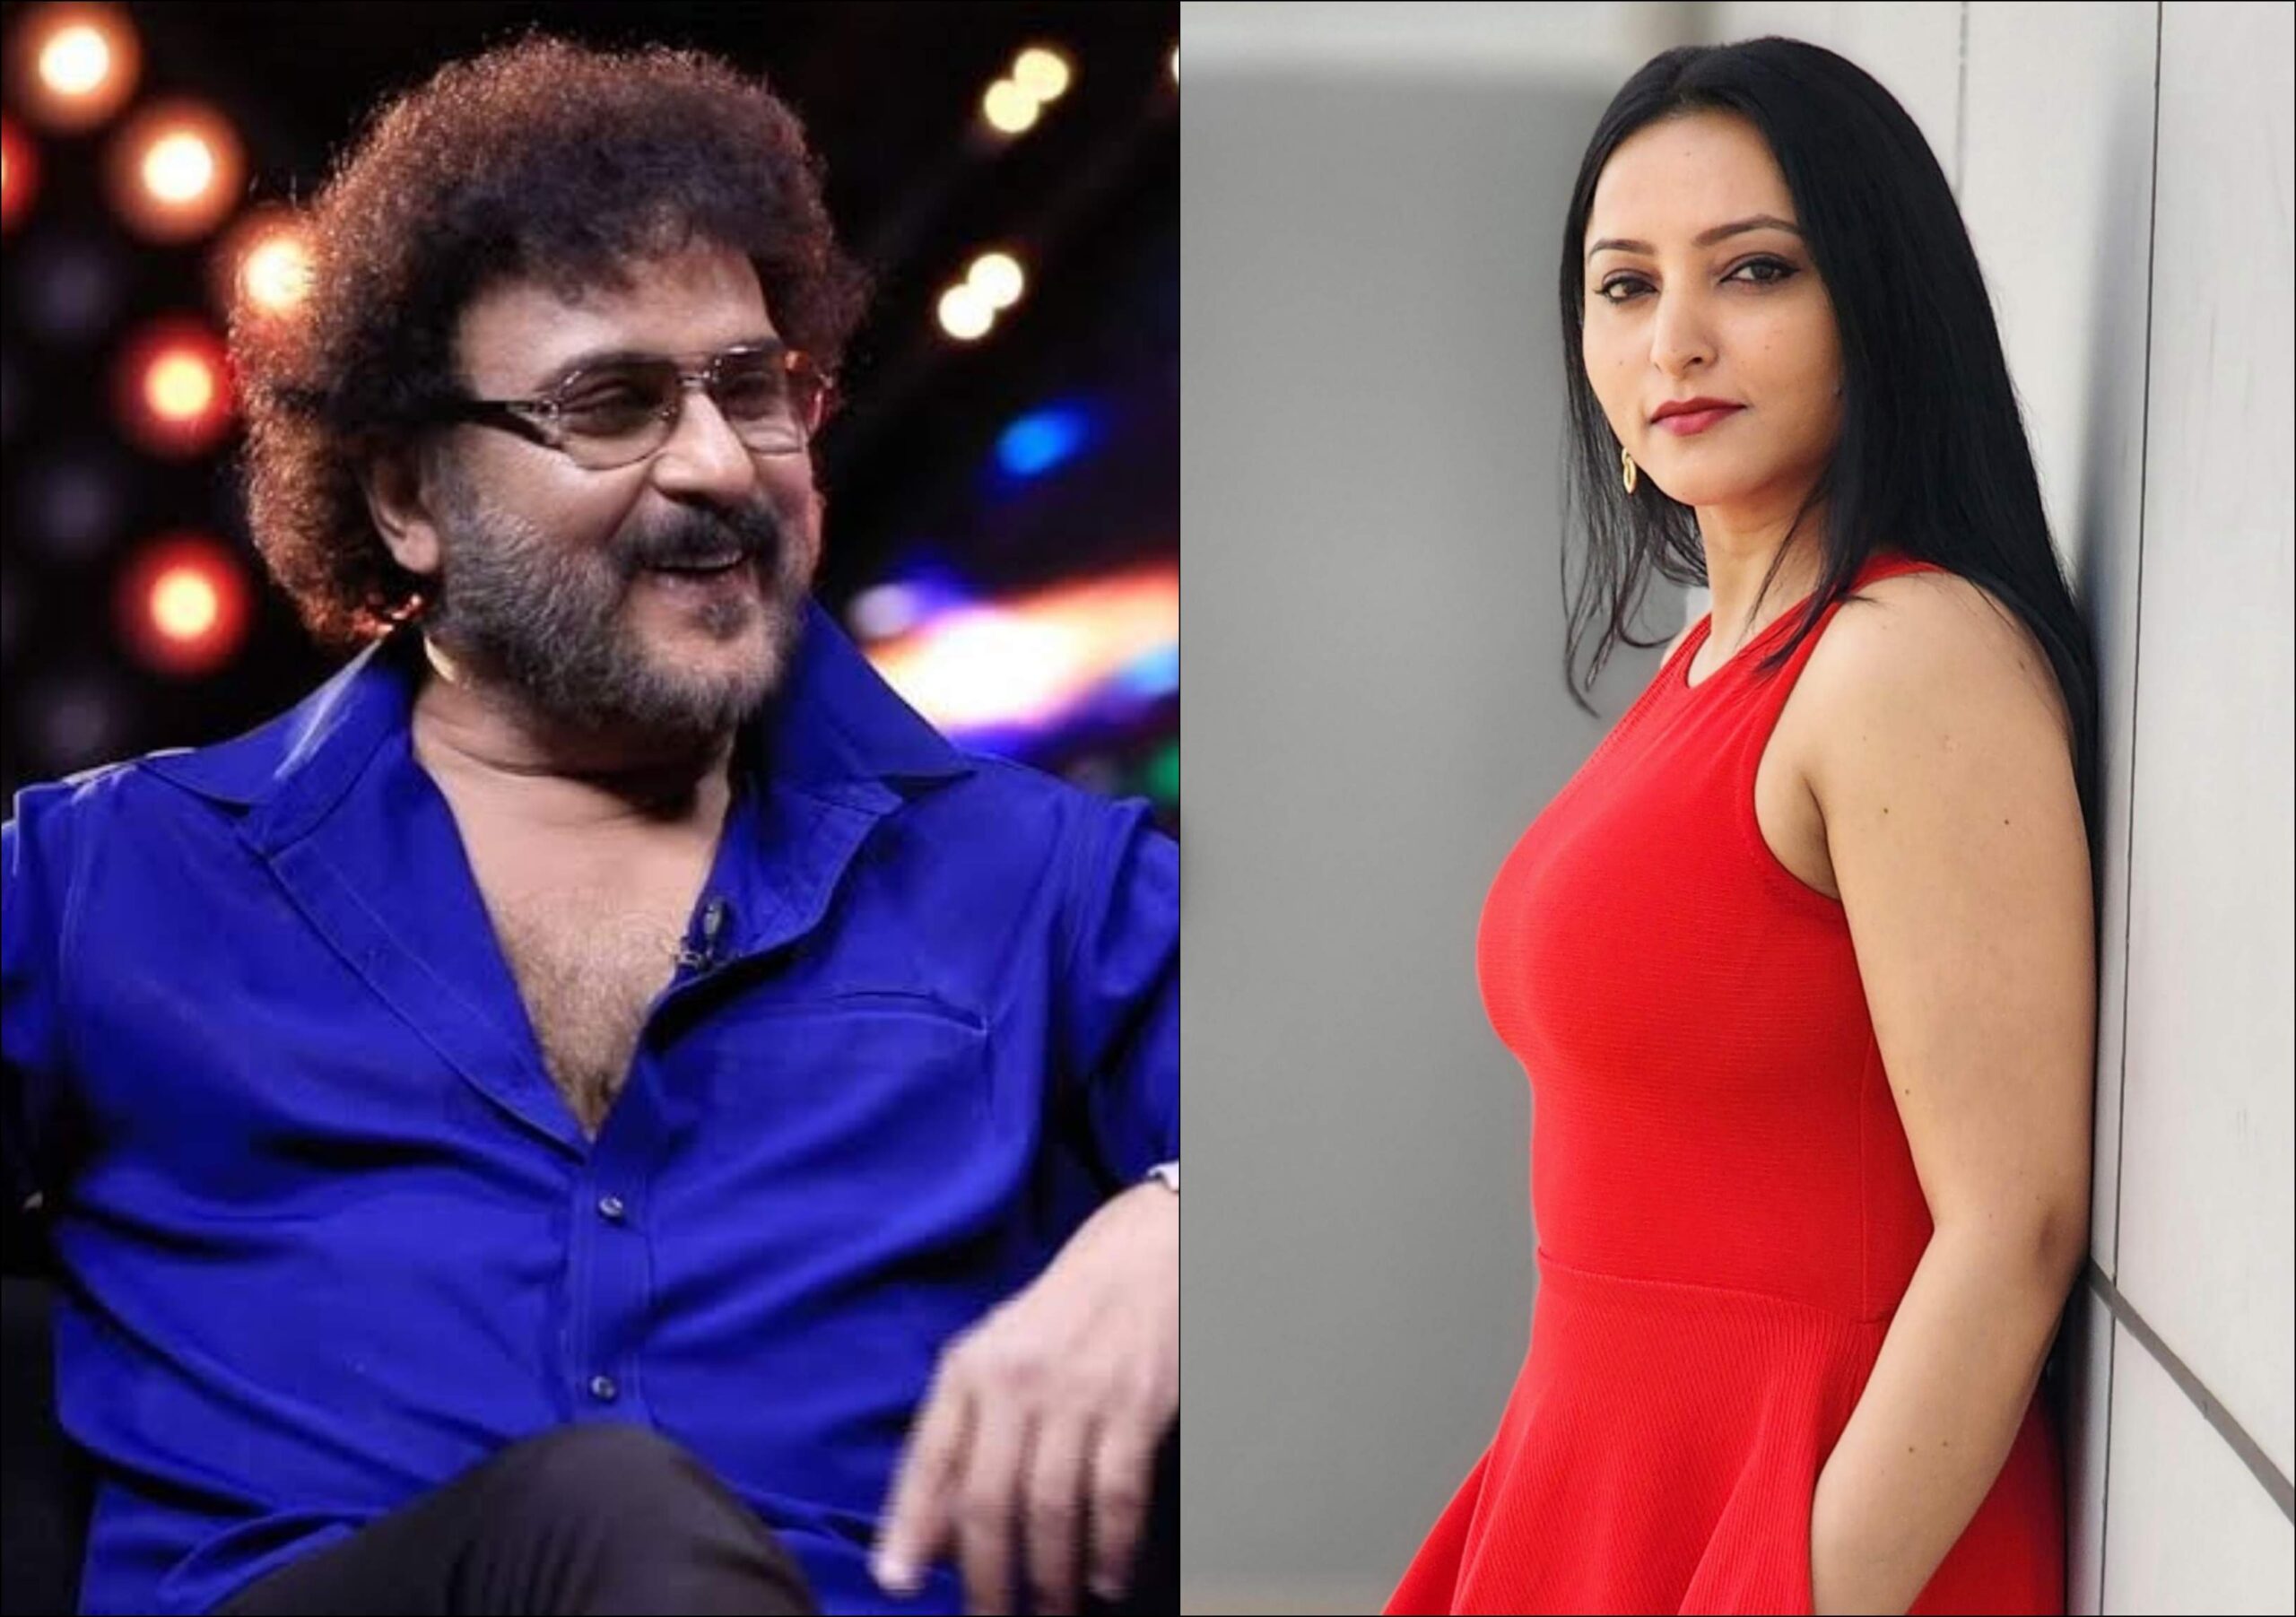 Meghana Gaonkar to star opposite Ravichandran in The Judgement